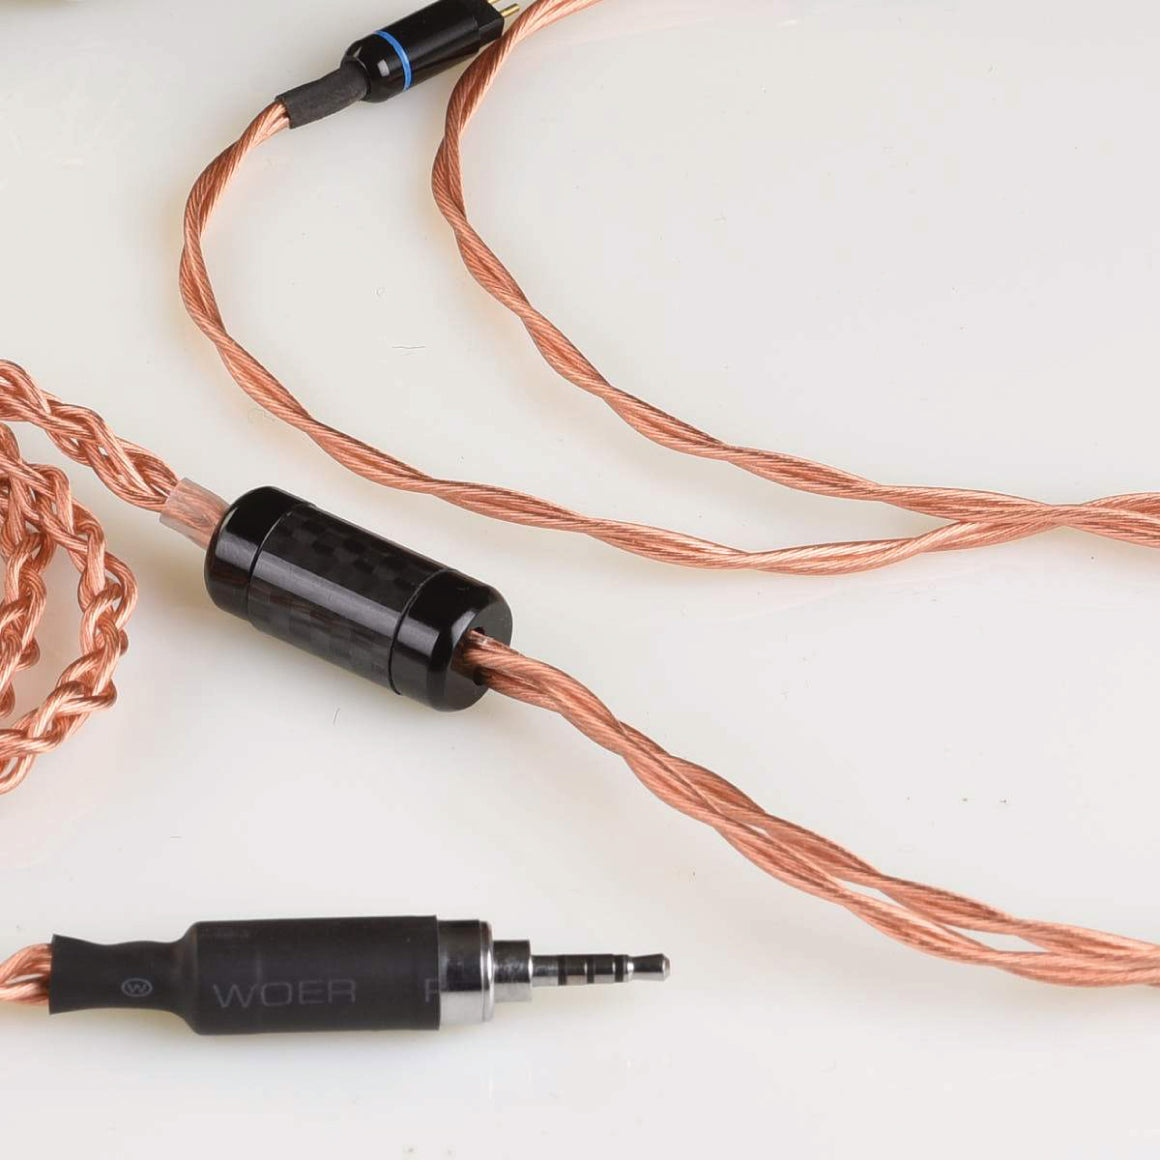 Headgear Audio - Litsa Copper Upgrade Cable For Audeze iSine20